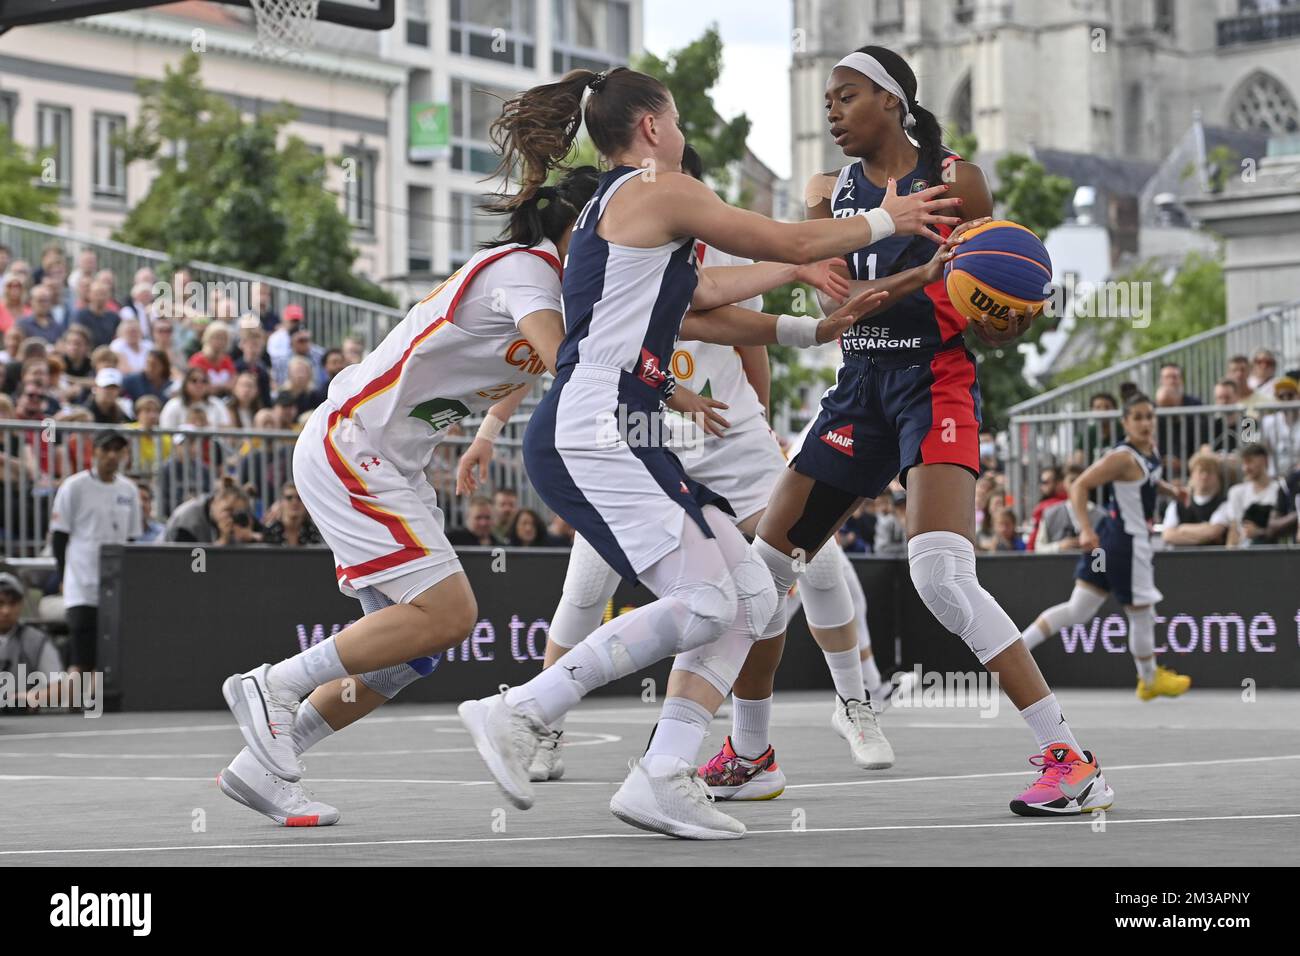 FRANCE Women 🇫🇷  Olympic basketball, Womens basketball, France basketball